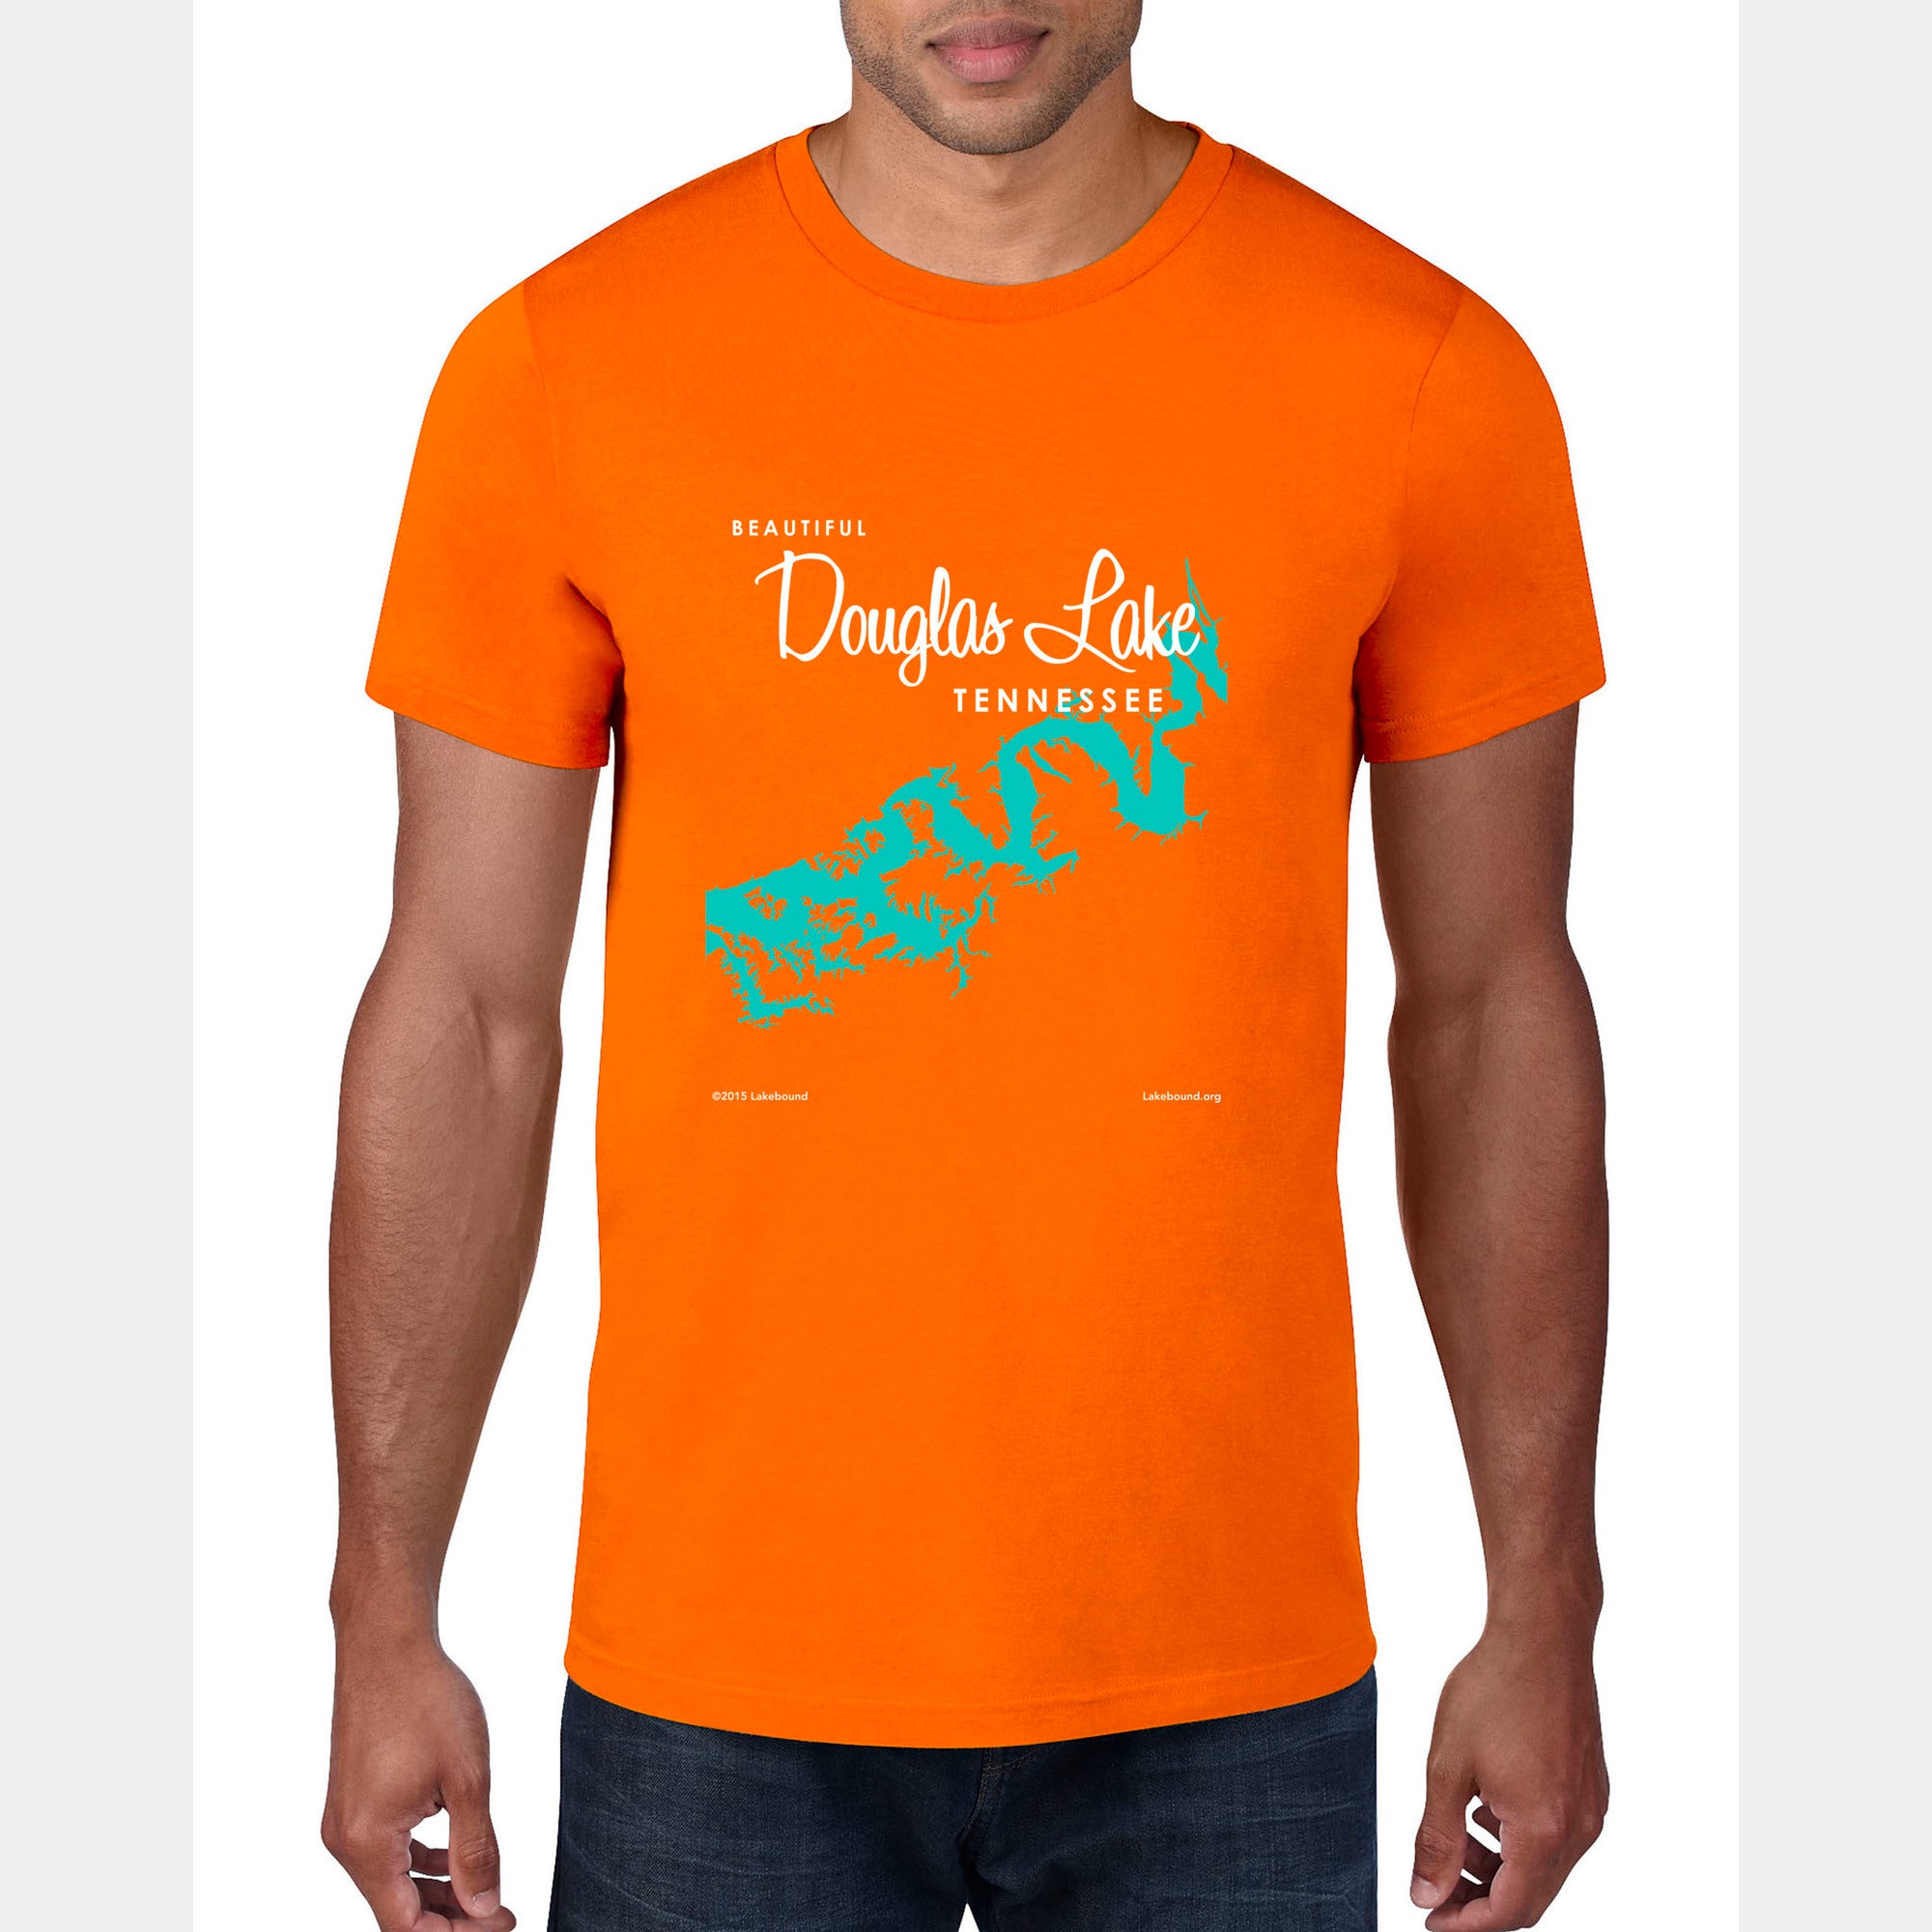 Douglas Lake Tennessee, T-Shirt